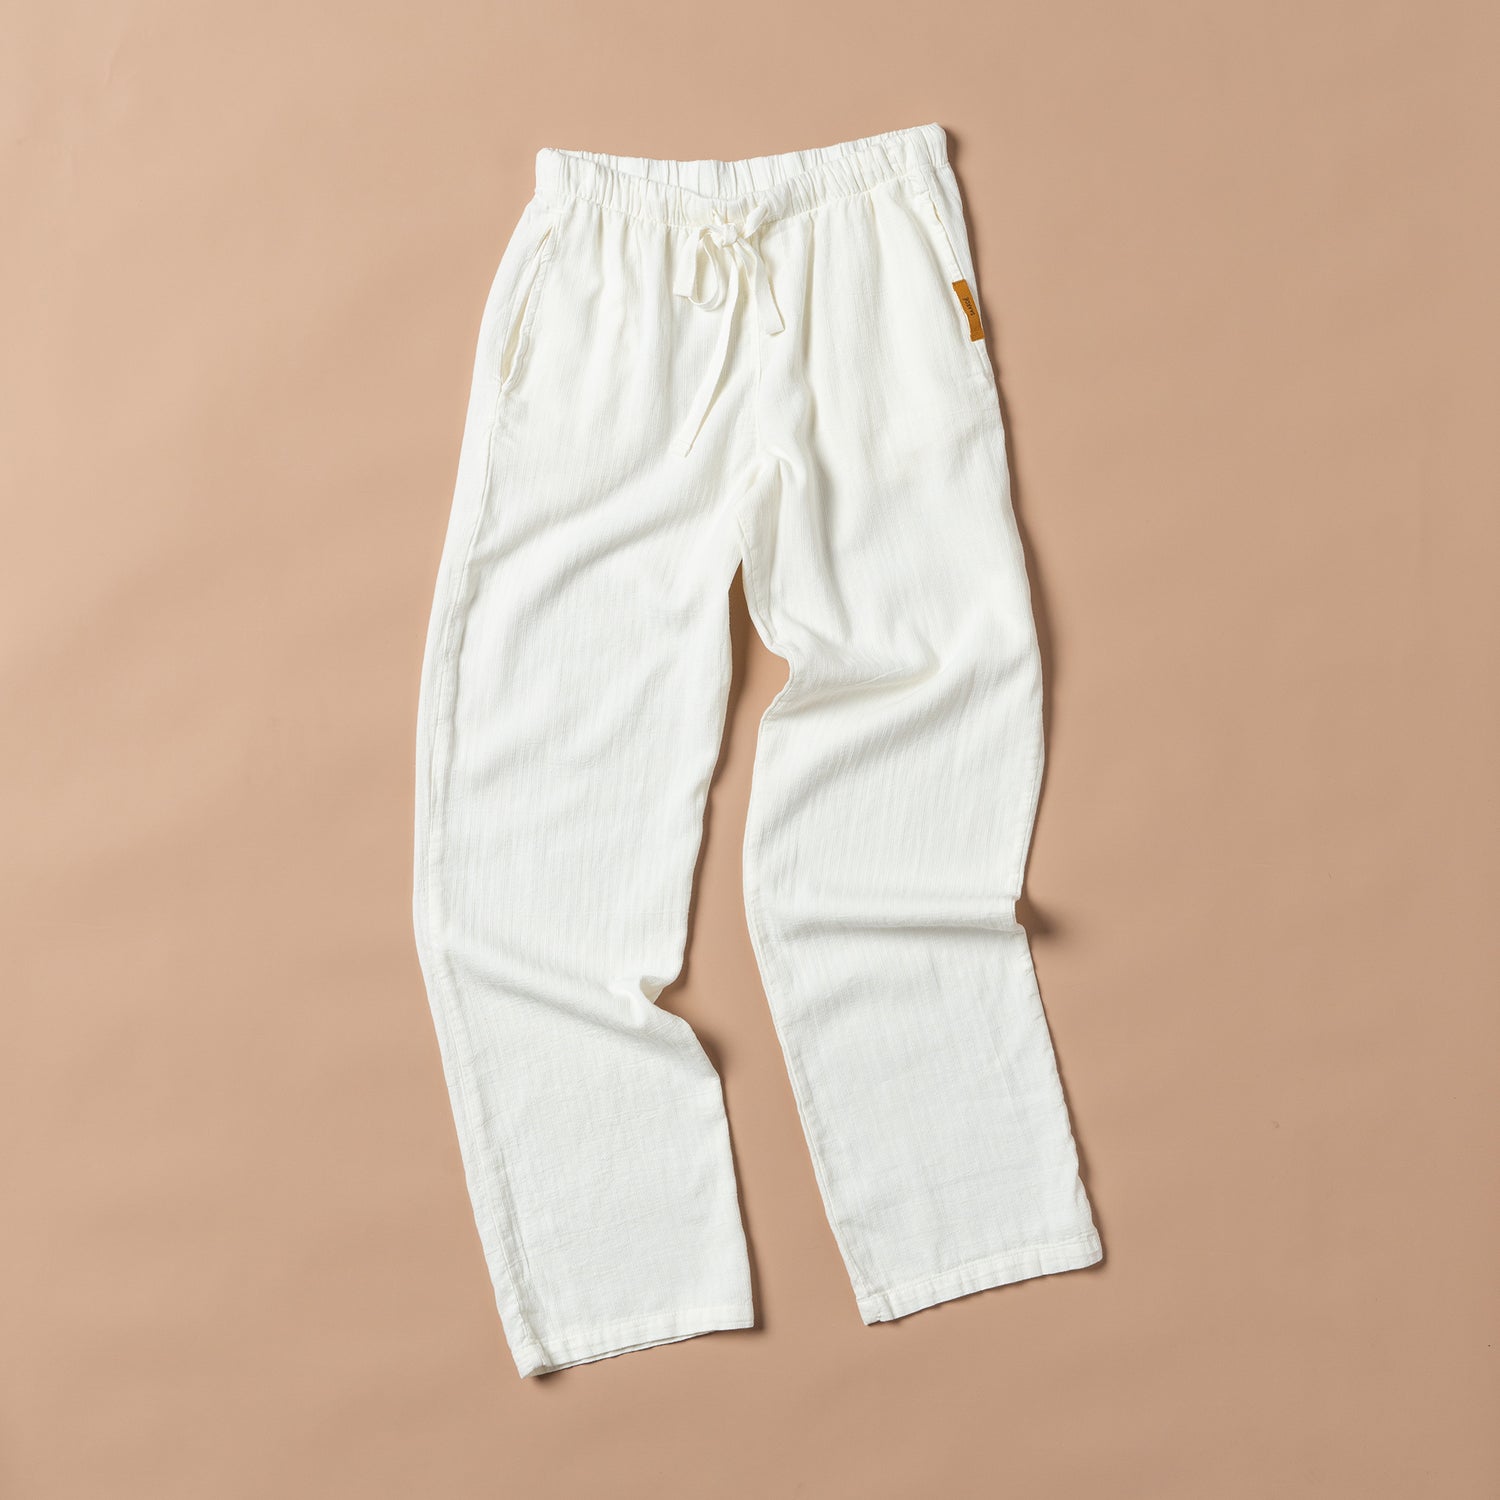 Eda Merino Wool Pants in Cream Ivory